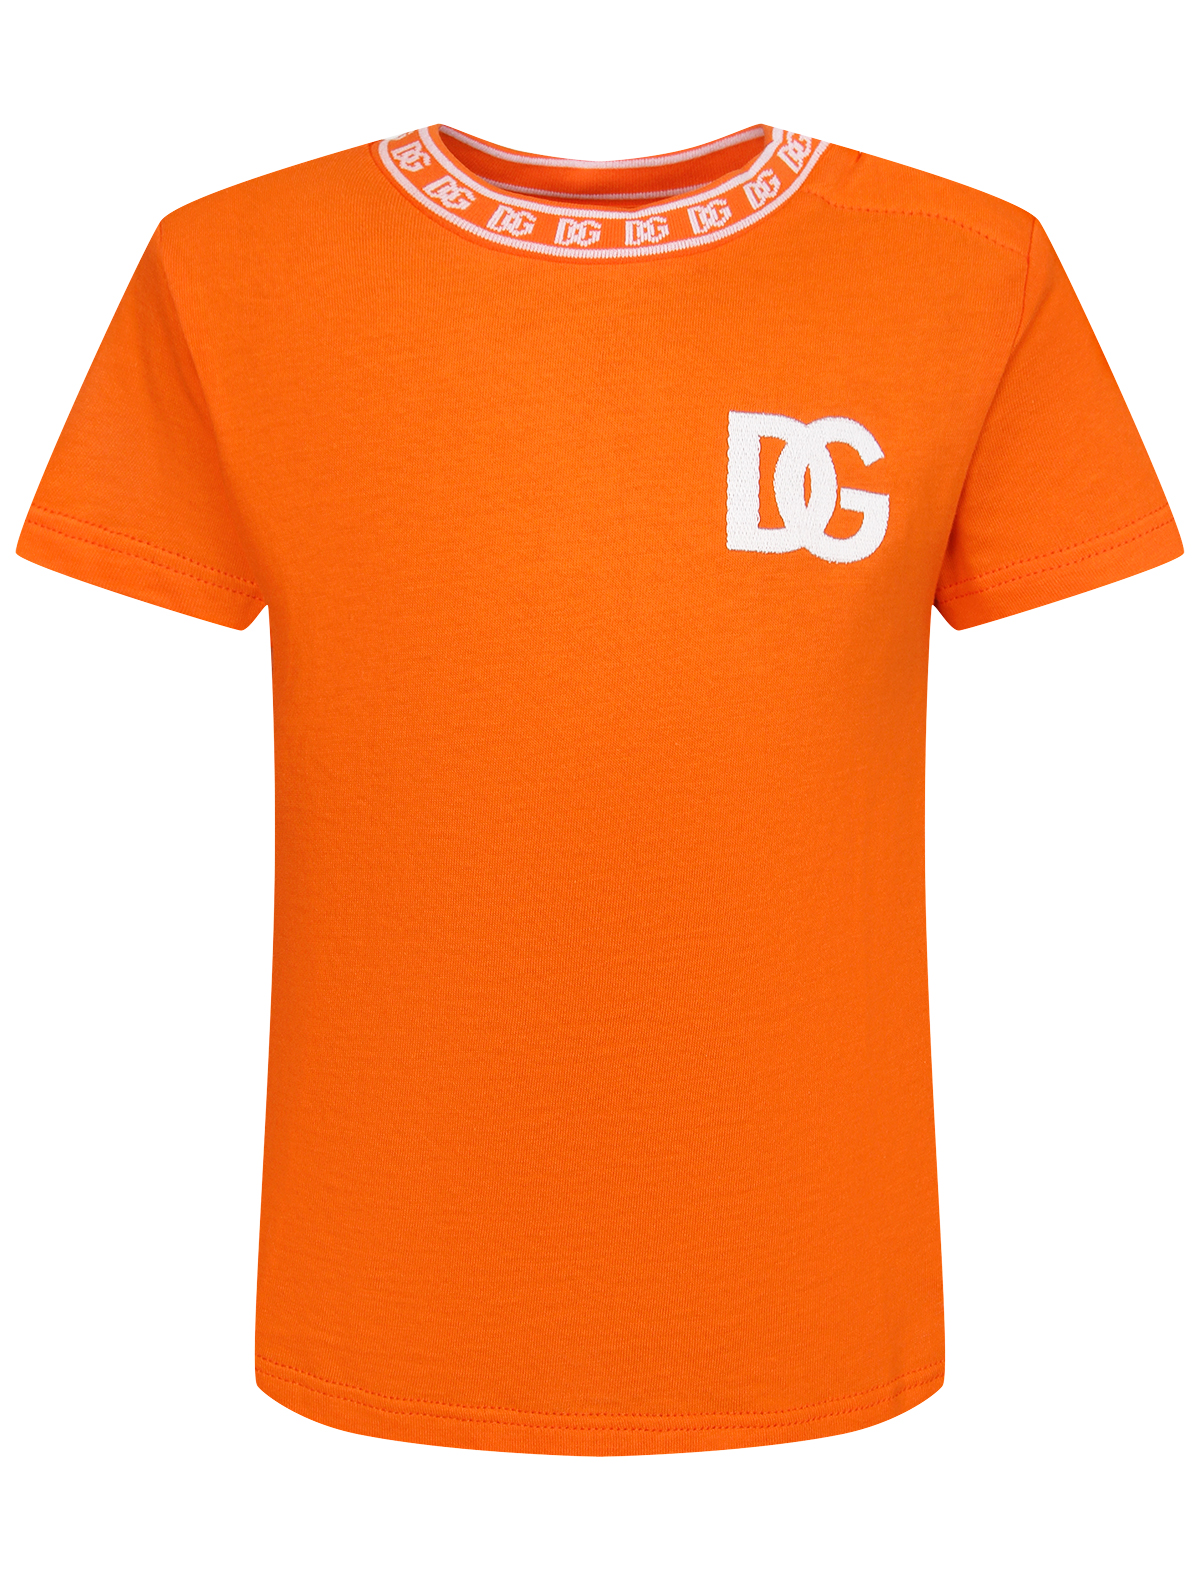 футболка dolce & gabbana малыши, оранжевая